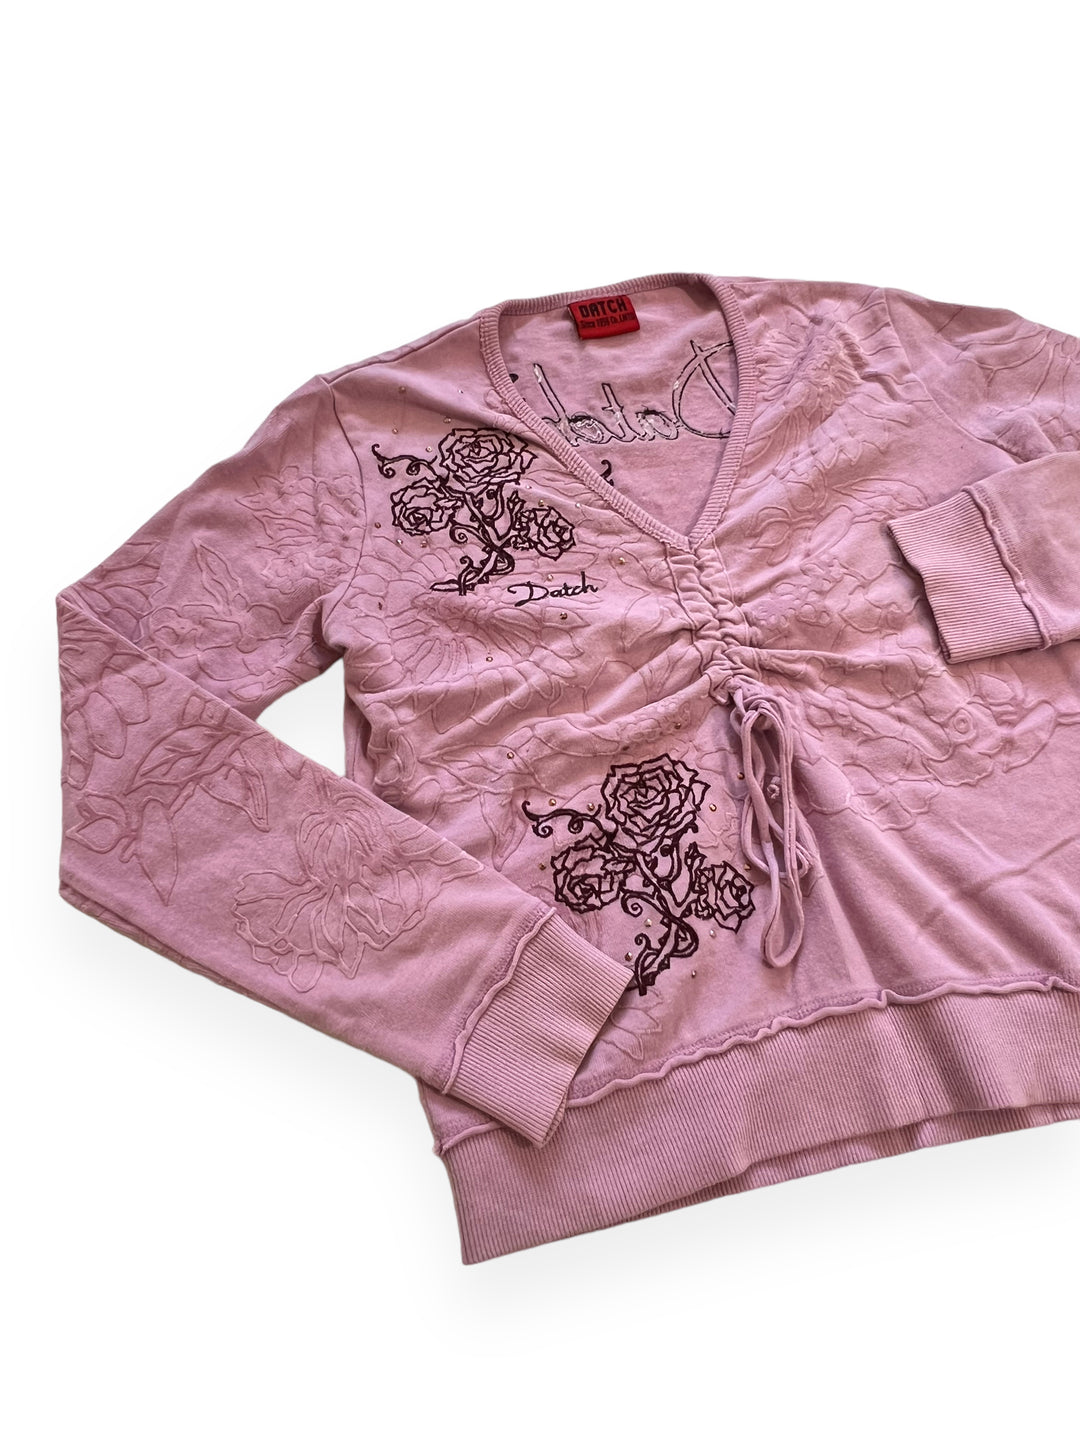 Vintage Y2K Embroidered Sweatshirt Women’s Medium